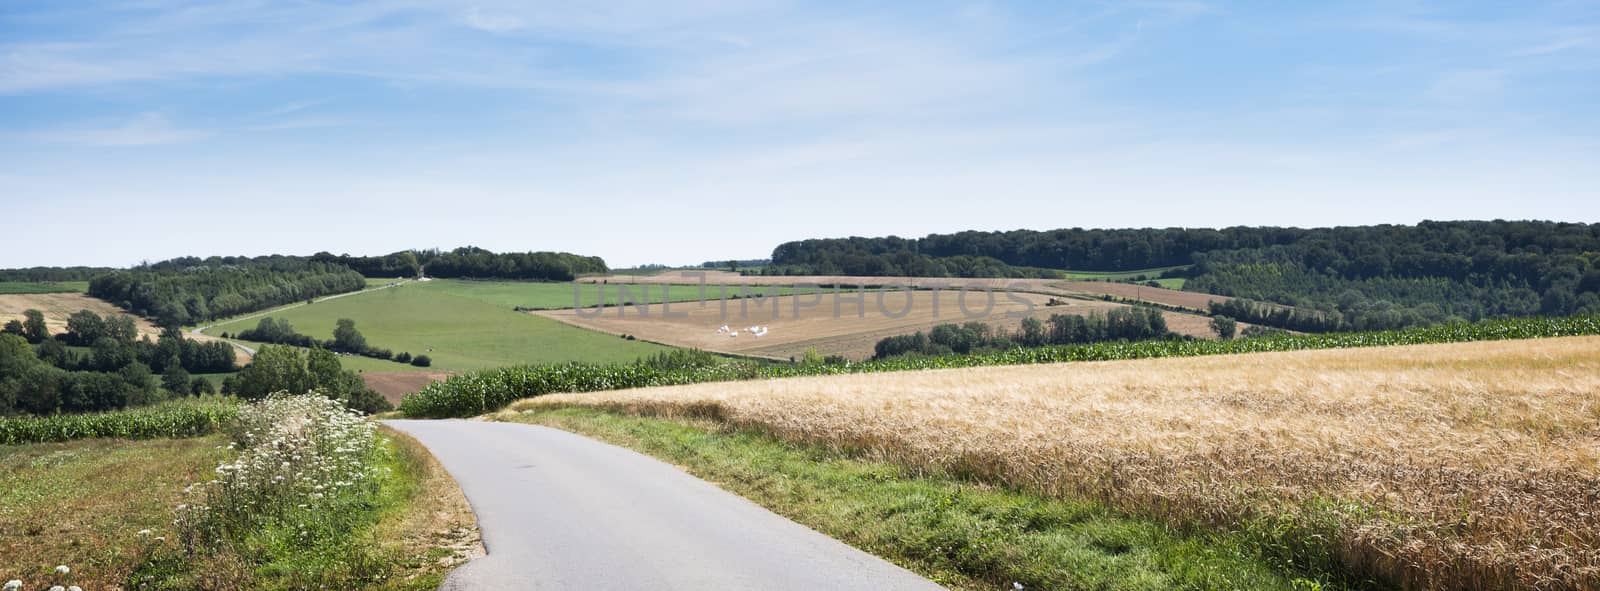 cornfields and meadows under blue sky in french pas de calais near boulogne by ahavelaar